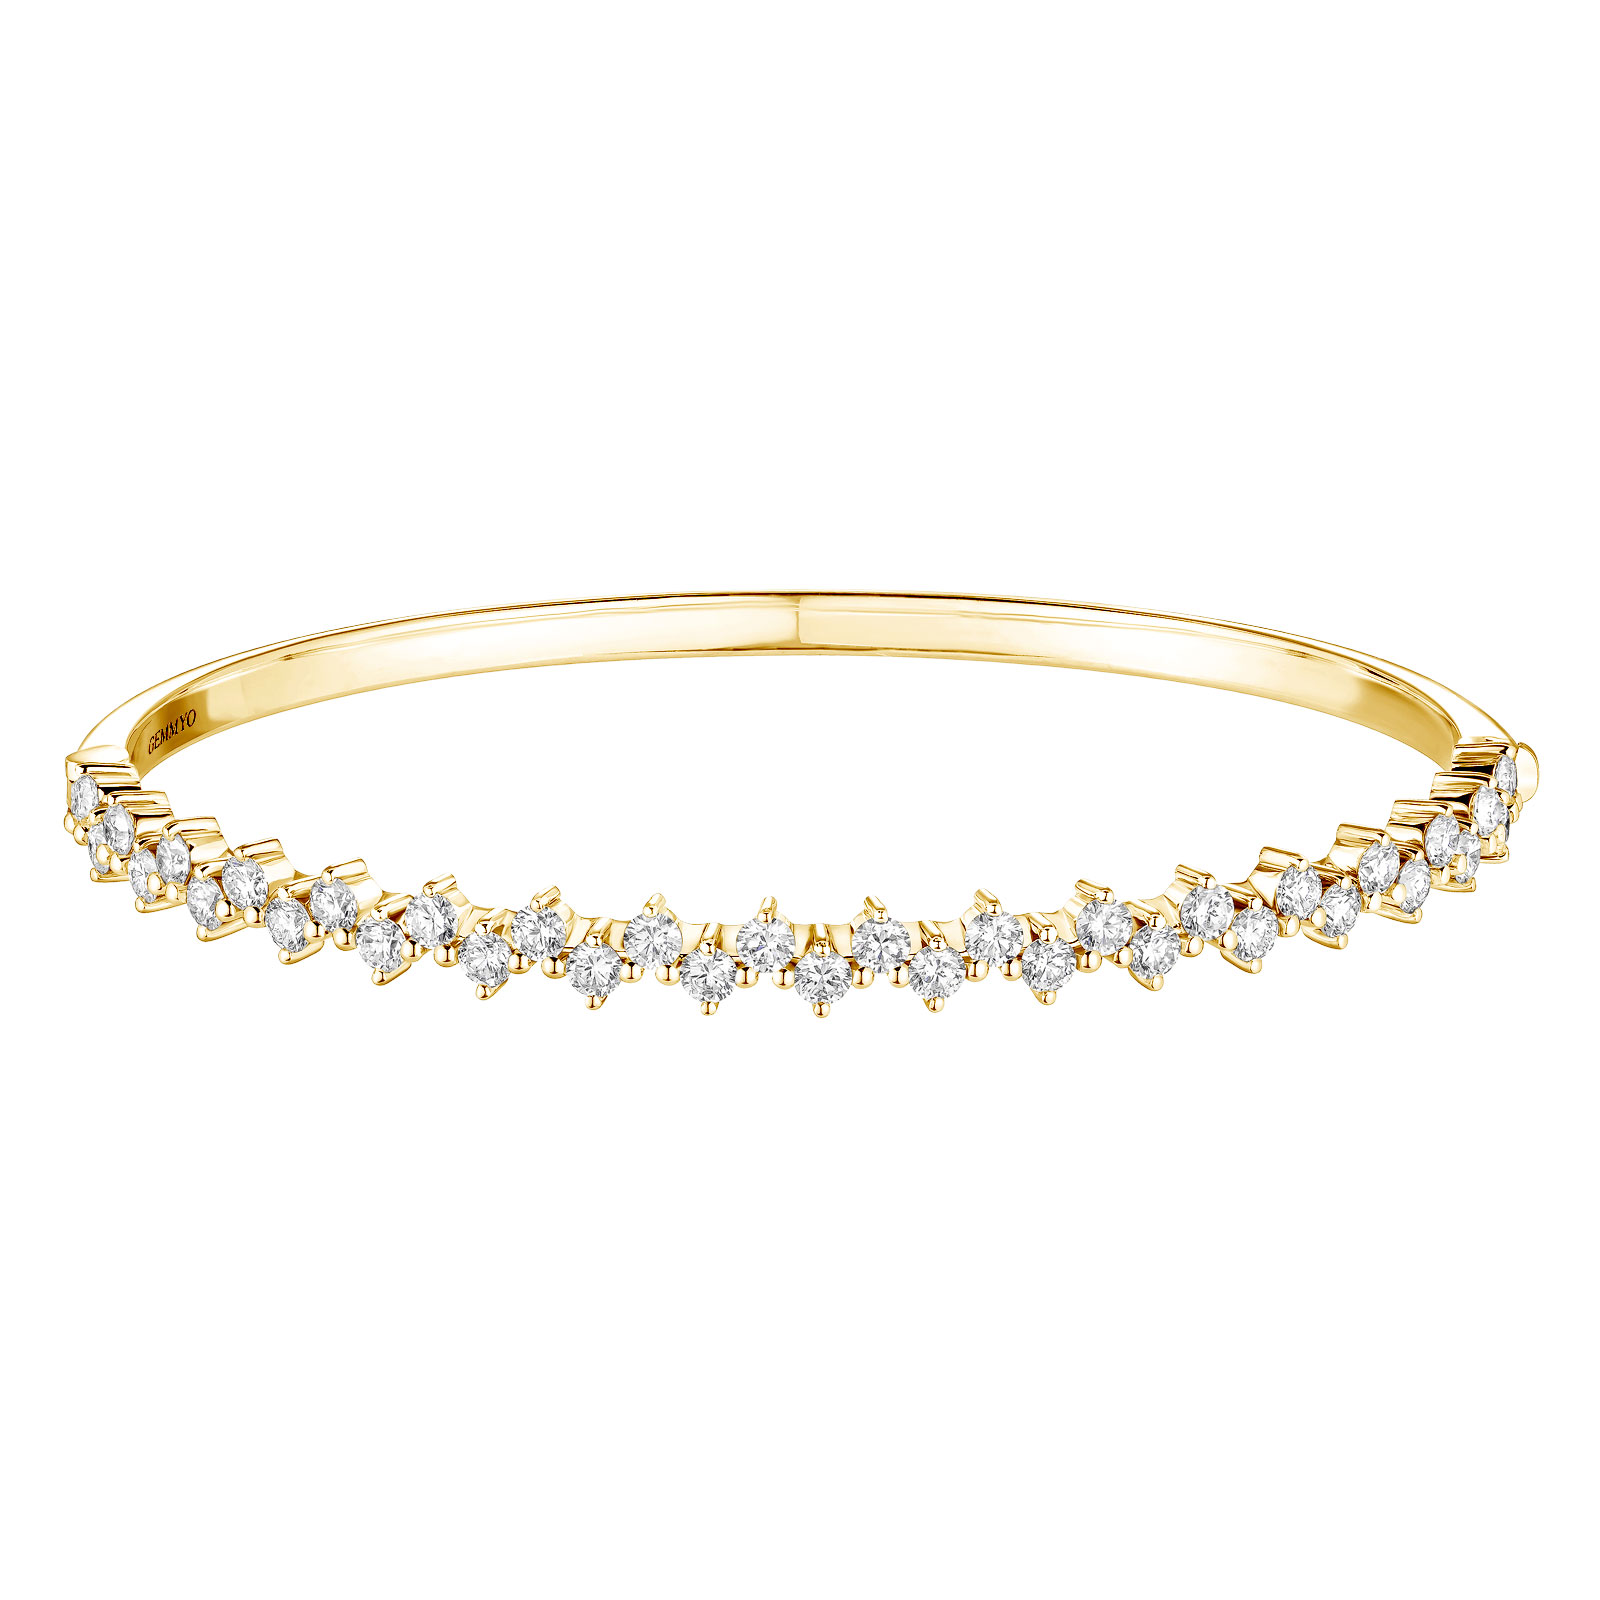 Bracelet Yellow gold Diamond Paris 1901 M 1